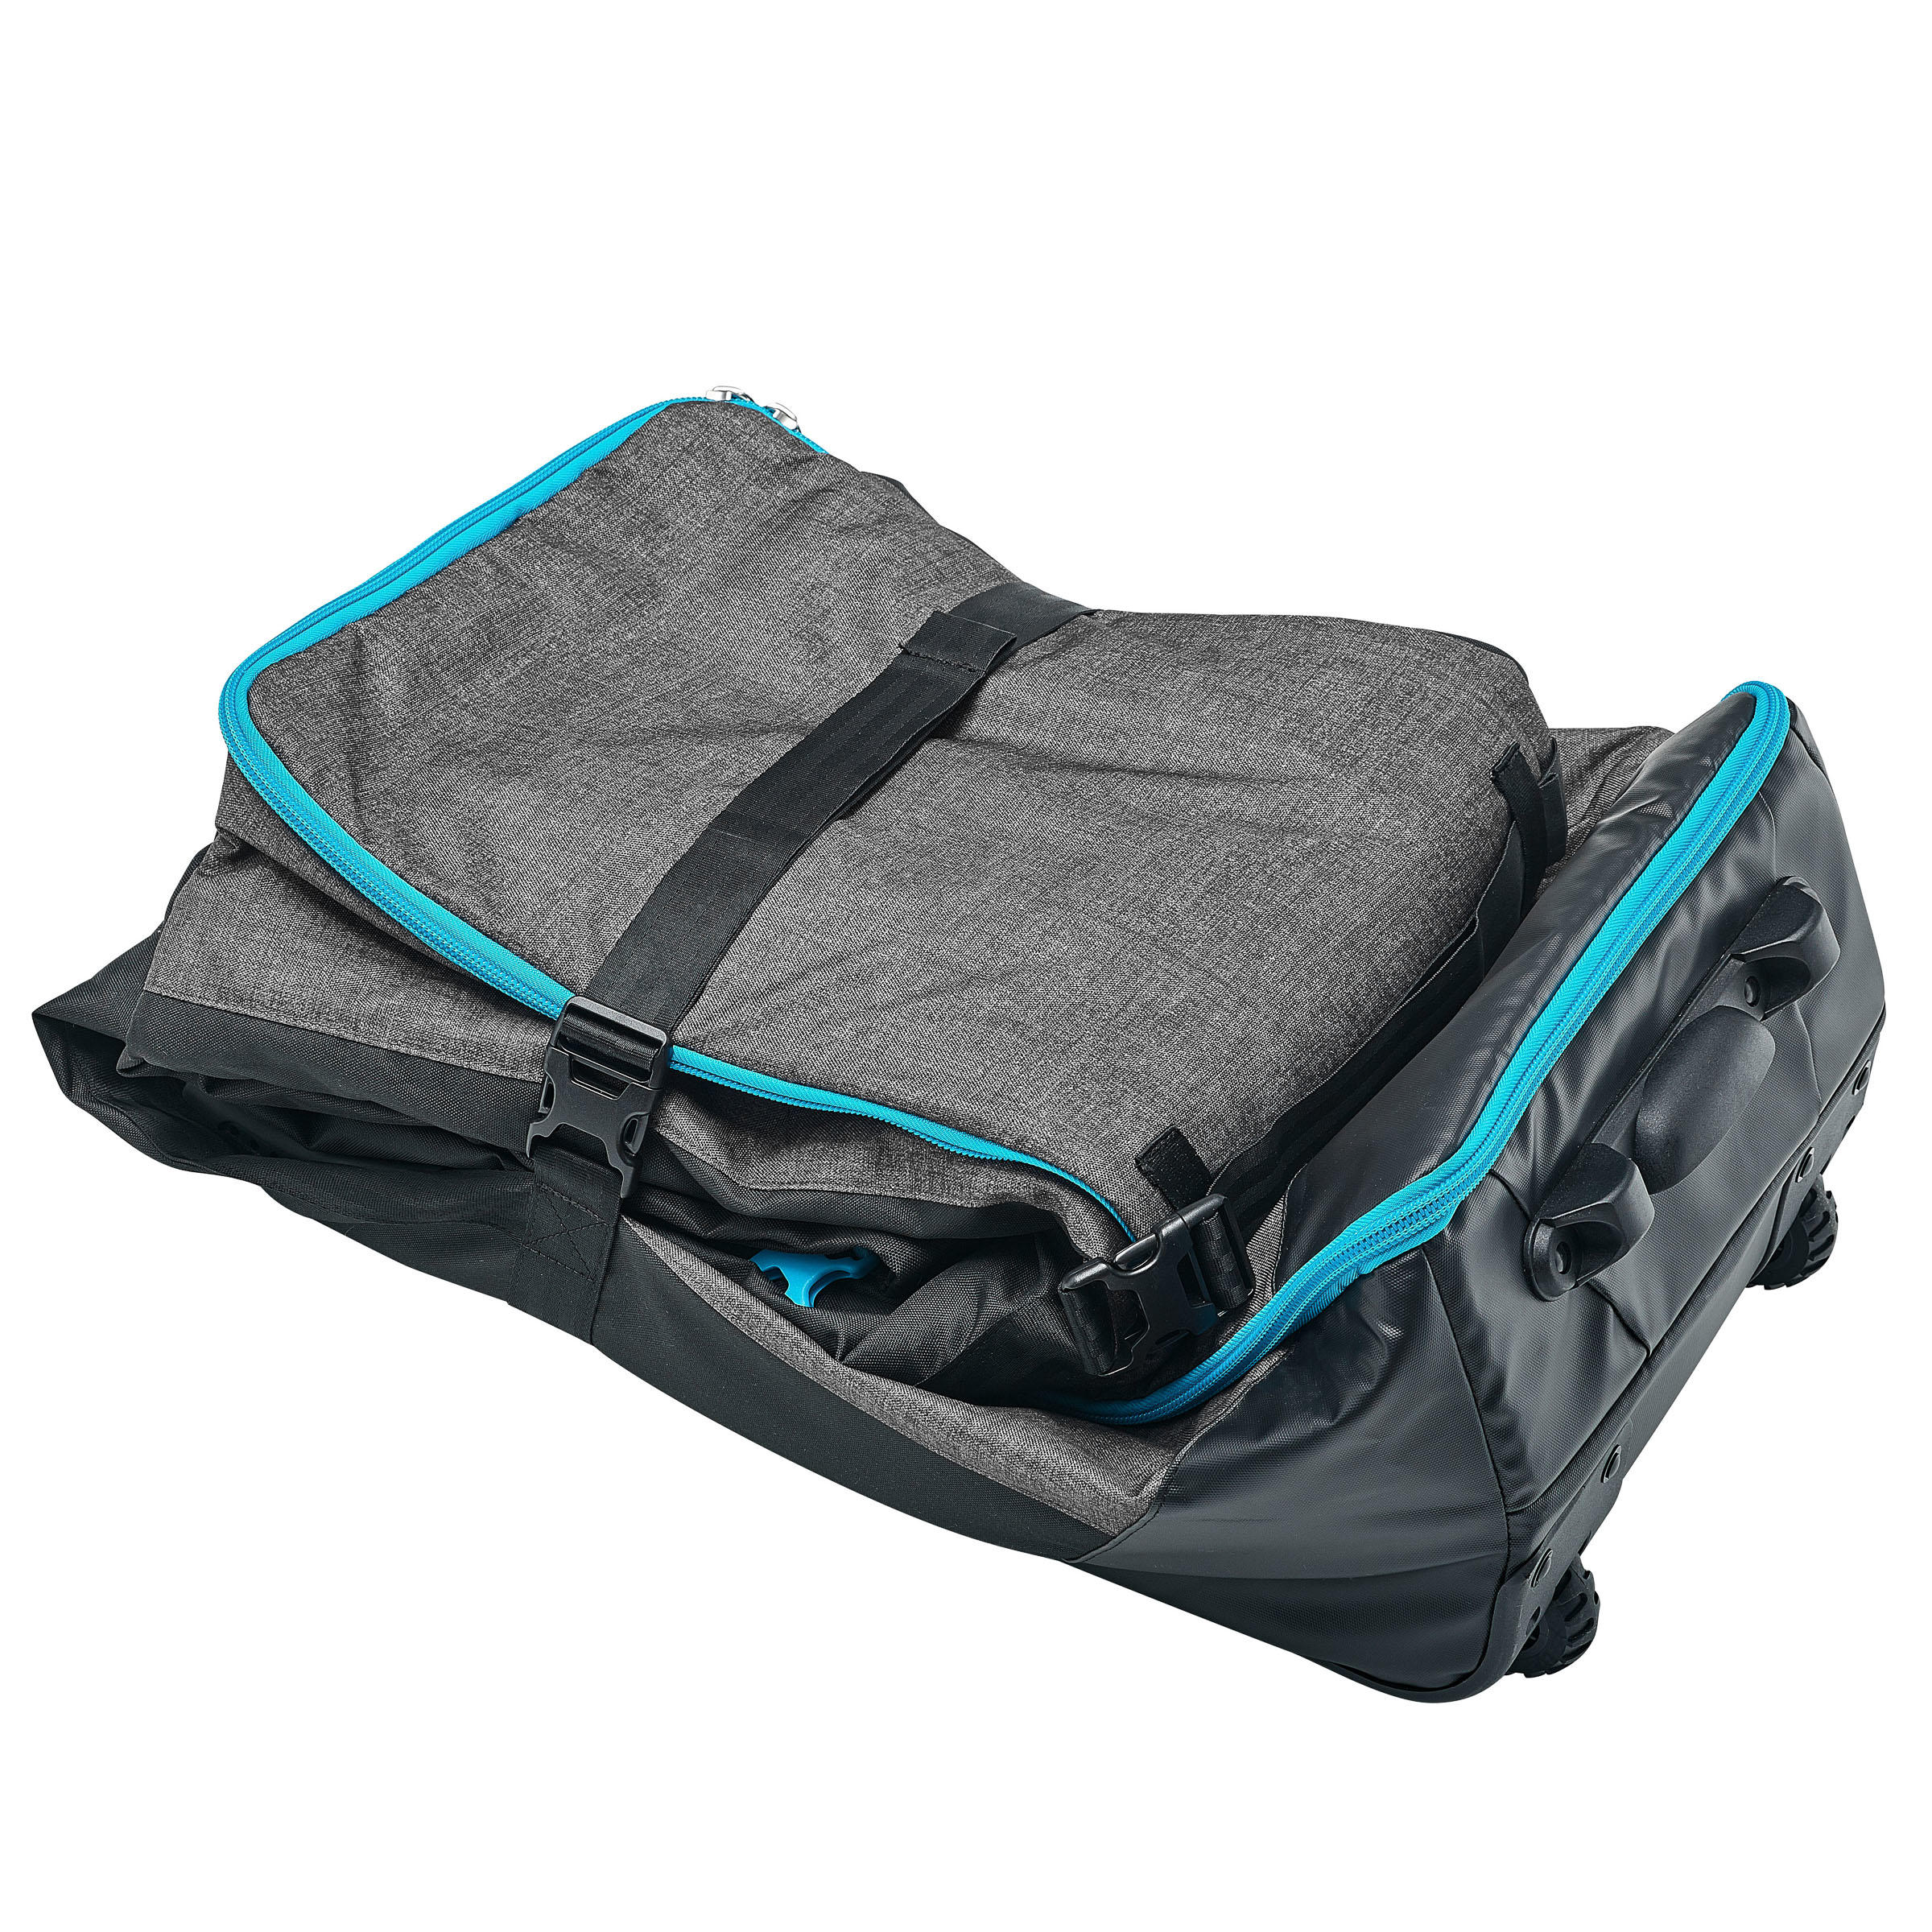 Bag For 4 Skis 3 Snowboards Grey Foam Reinforcements Ergonomic Carry Handle Bag 